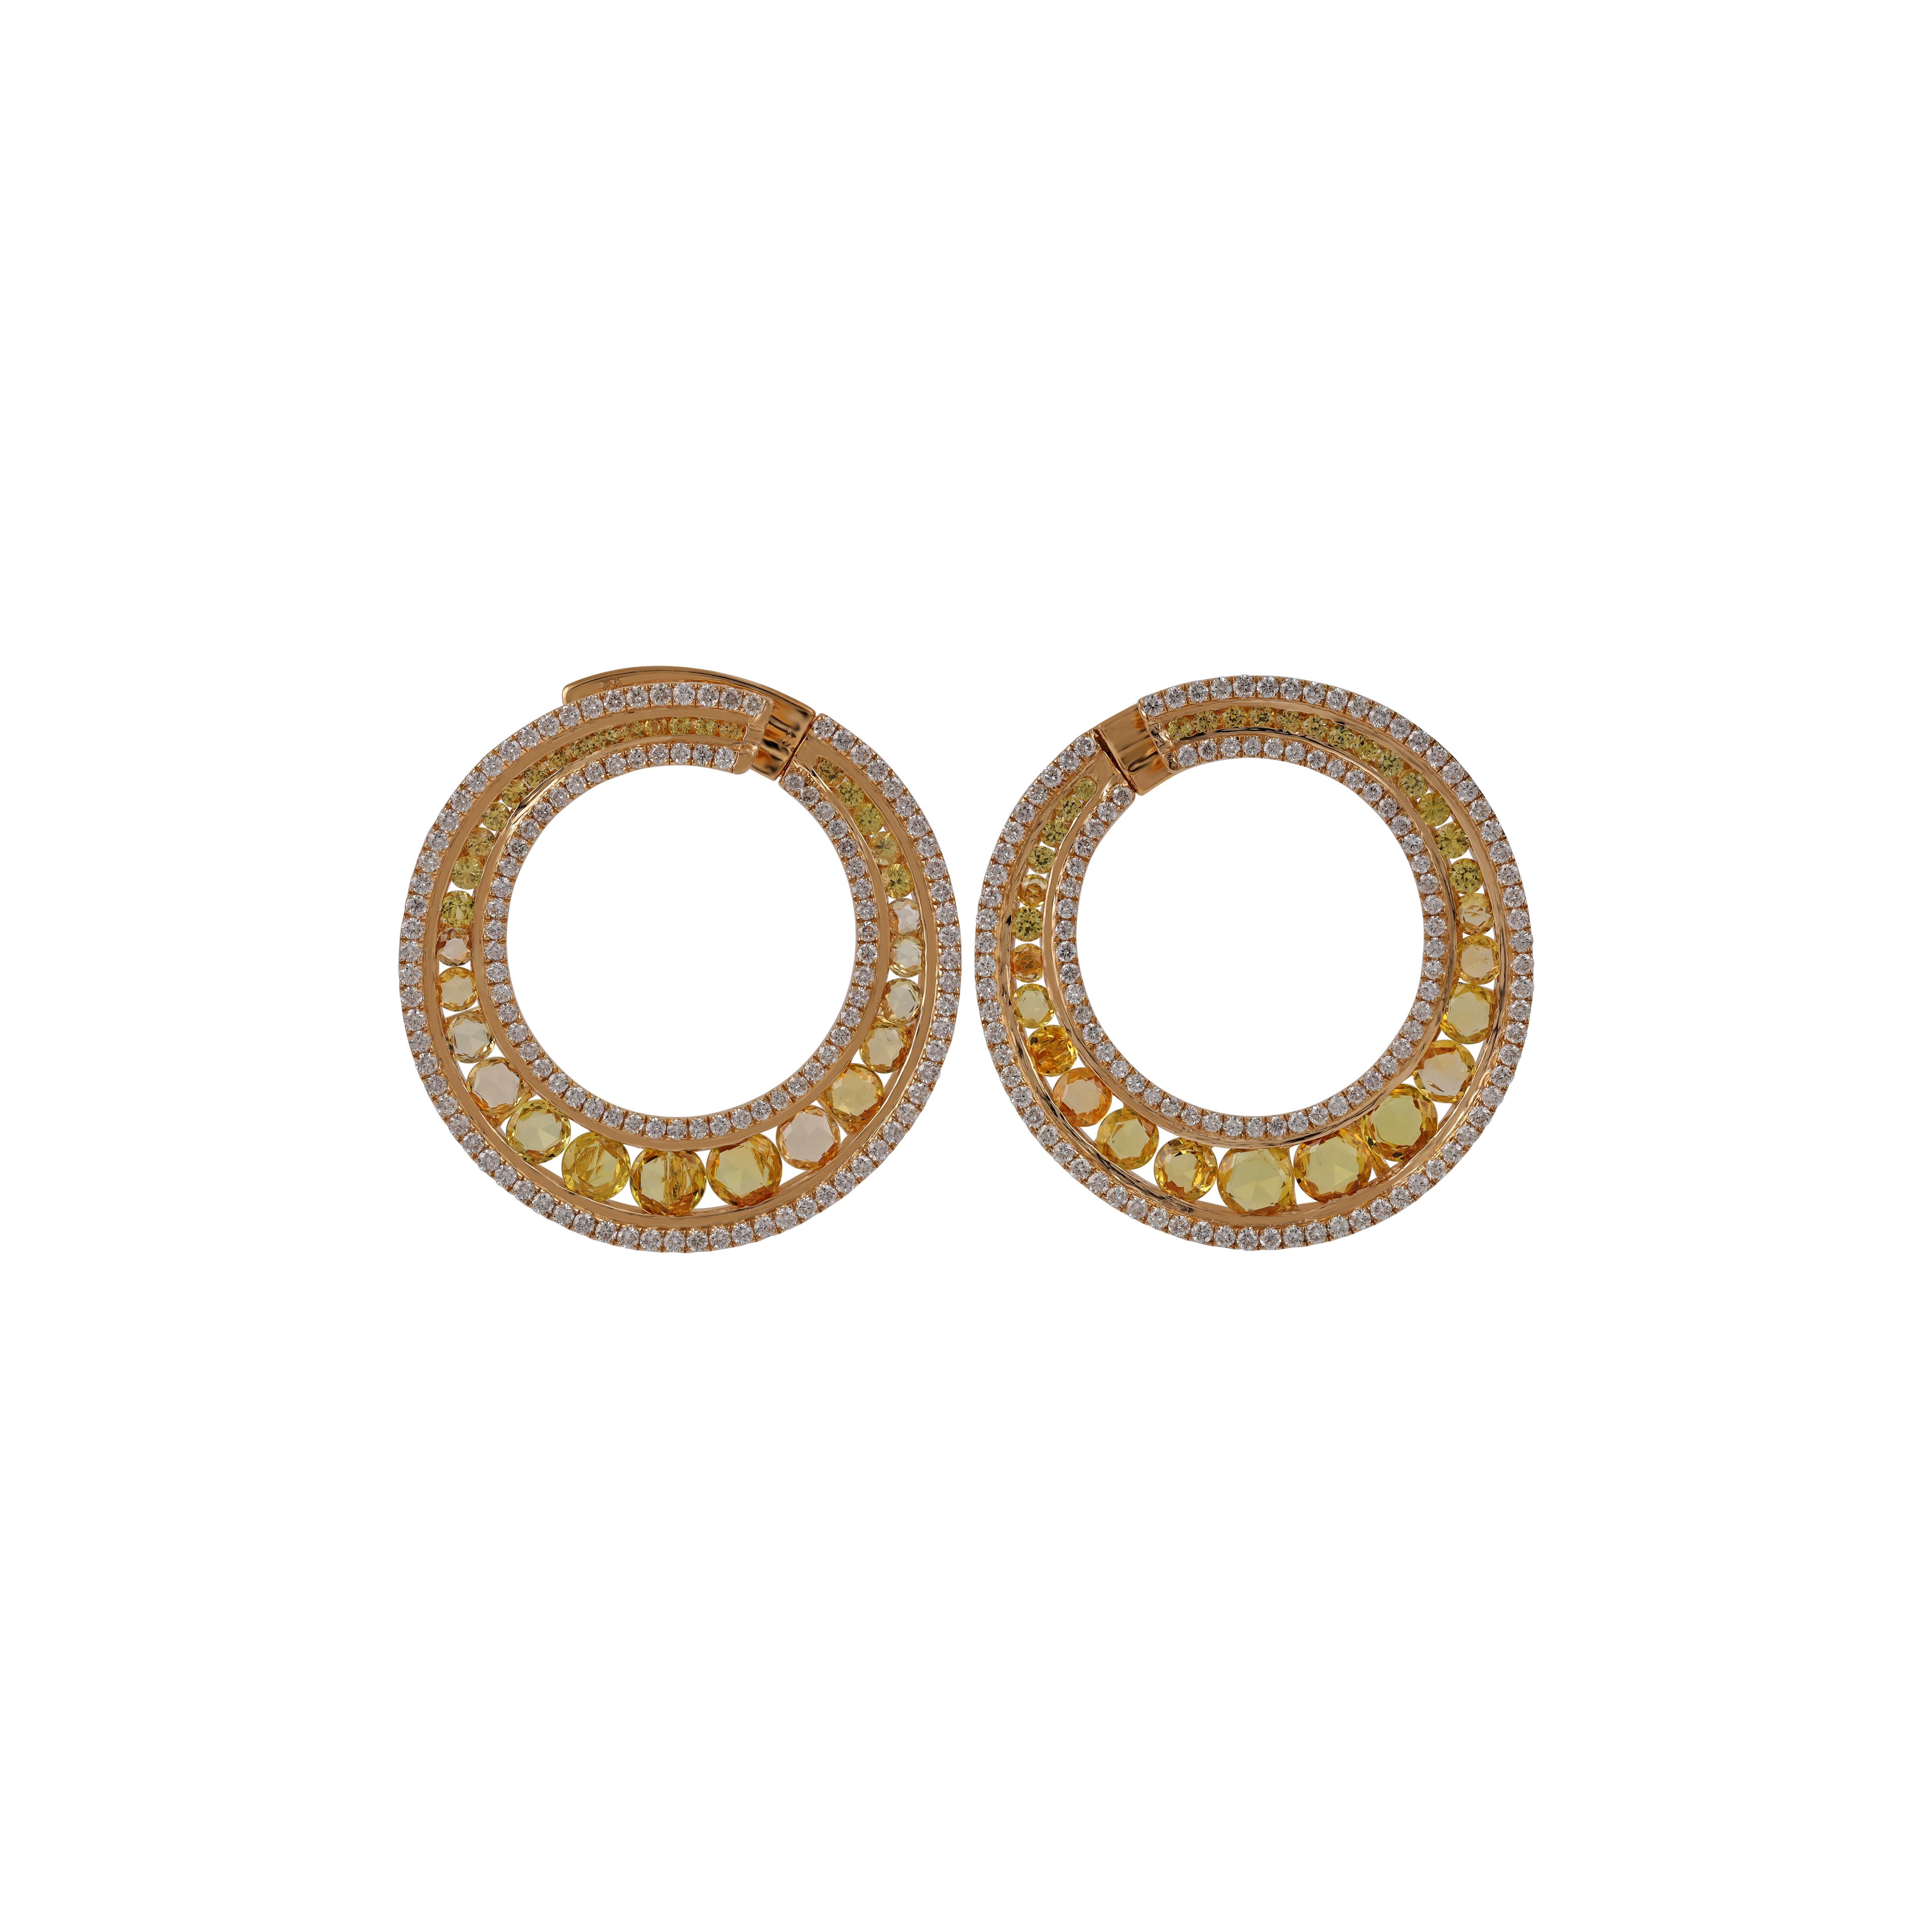 3.52 Carat Multi Sapphires / 0.85 Carat Yellow  Sapphires & Diamond Earring in 18 kt Yellow Gold.
Multi Sapphires-3.52 Carat
Yellow Sapphires- 0.85
Diamond -1.67 Carat
Gold-12.73
